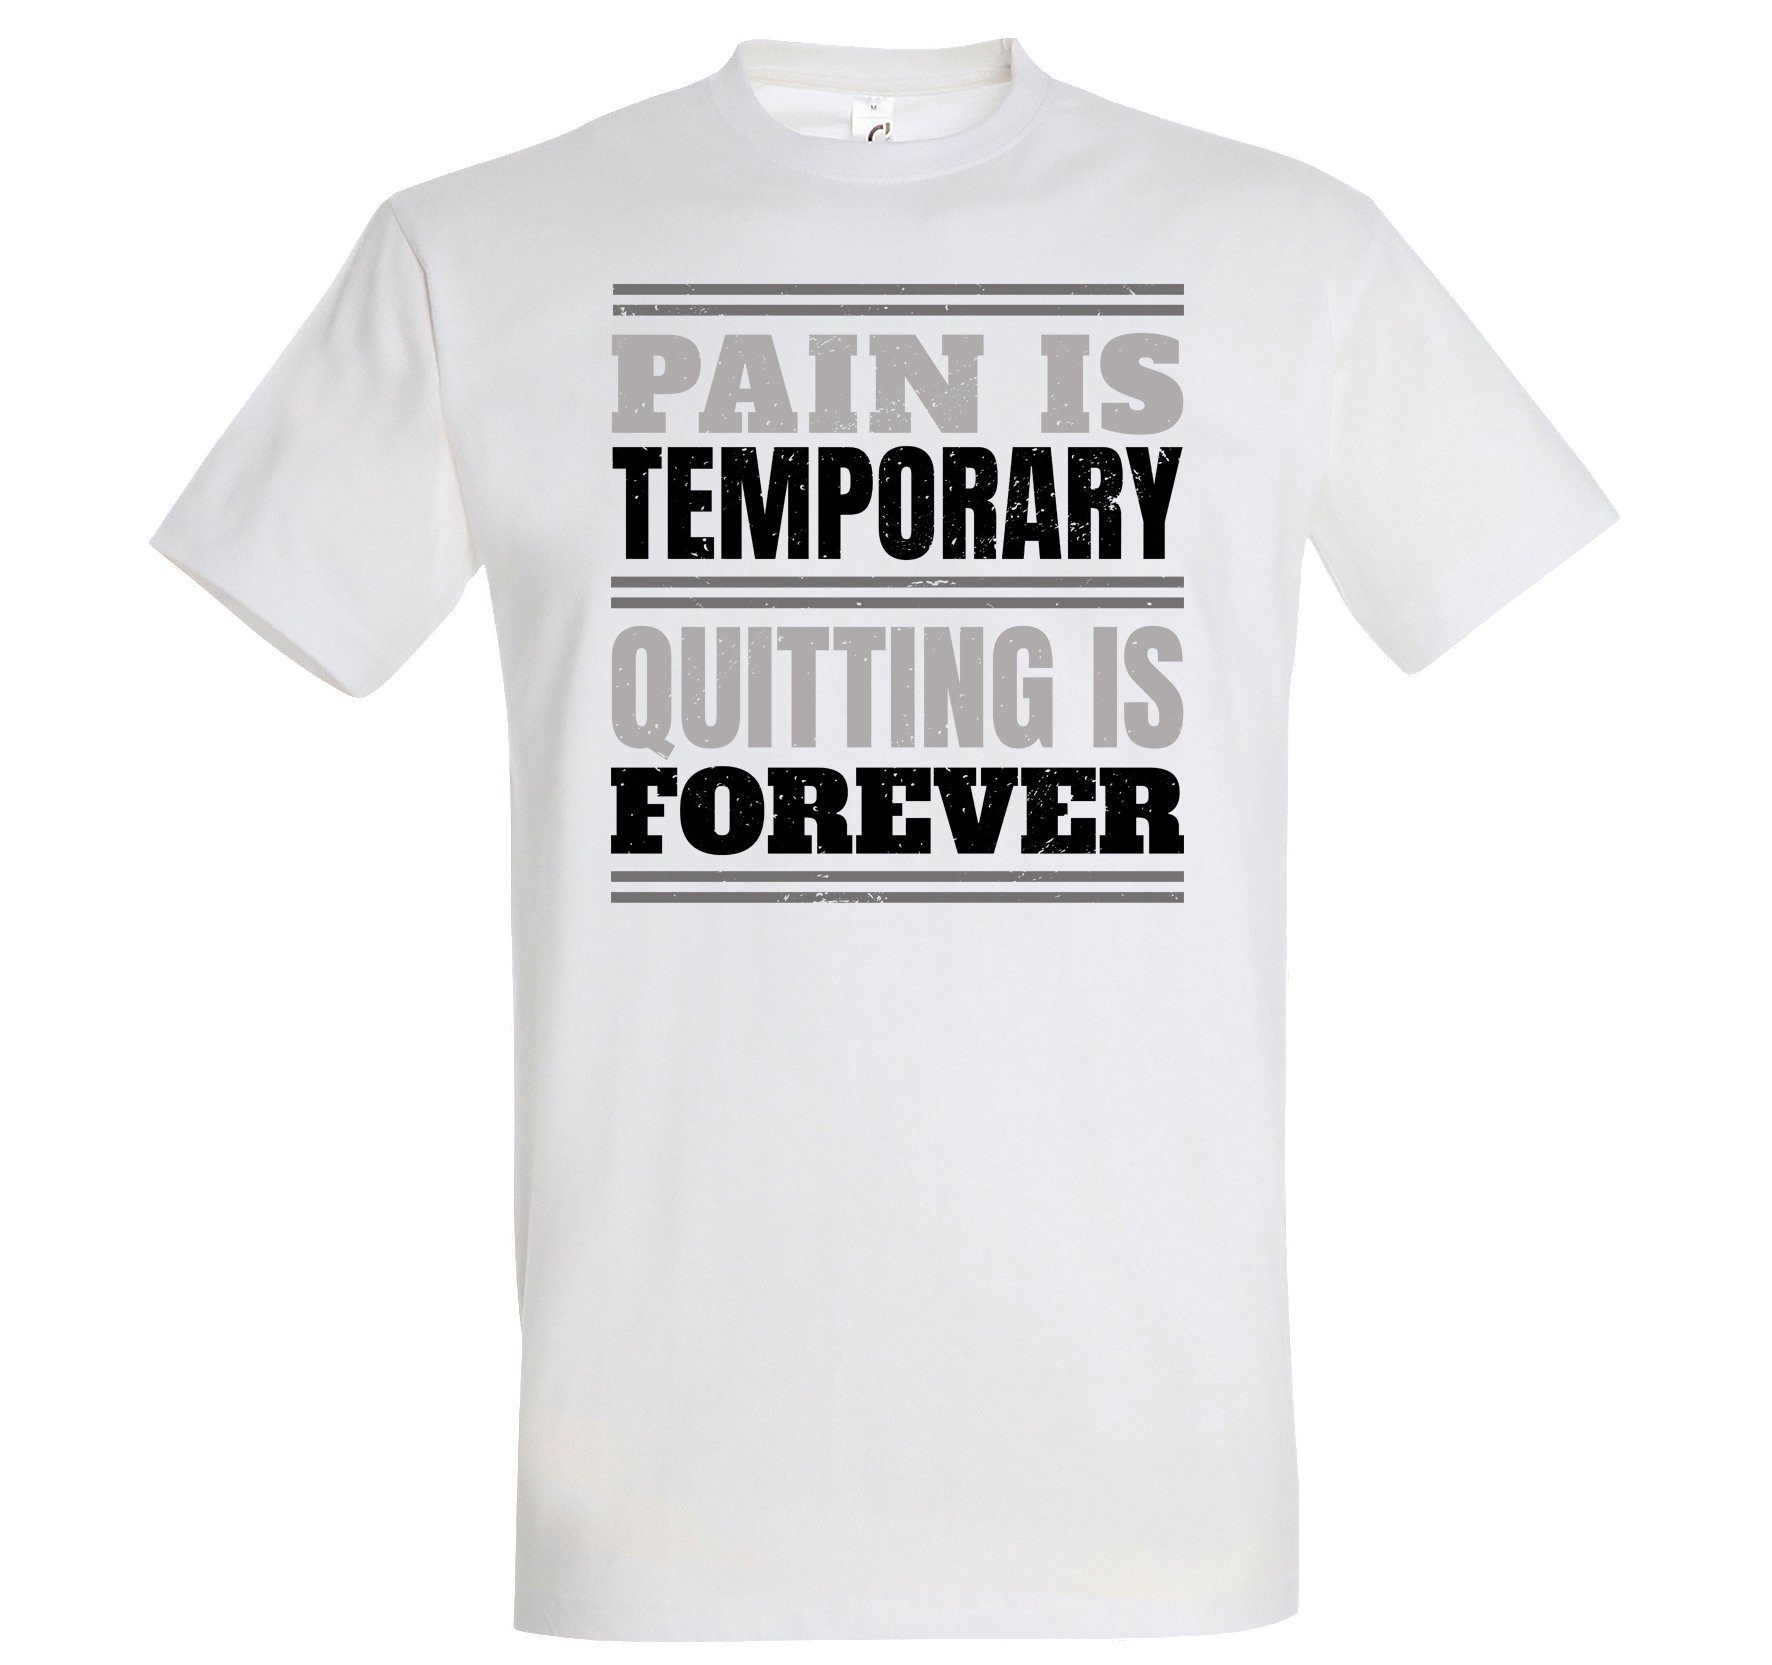 Frontdruck Trendigem mit T-Shirt Youth FOREVER! Shirt IS IS QUITTING TEMPORARY, PAIN Herren Weiss Designz